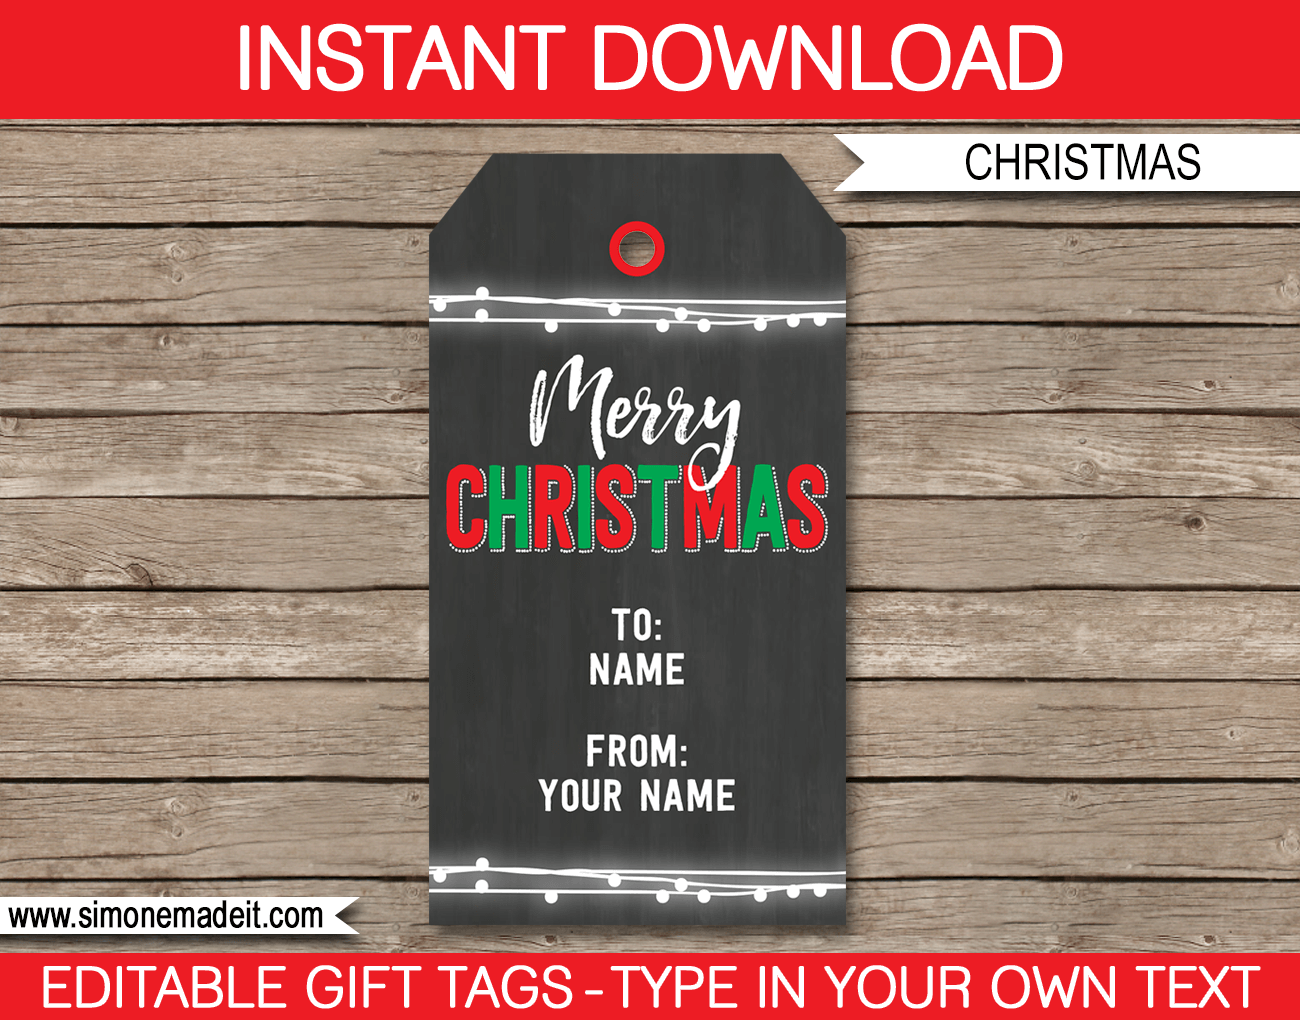 Merry Christmas Gift Tags Template | editable & printable | Chalkboard | INSTANT DOWNLOAD $3.00 via simonemadeit.com